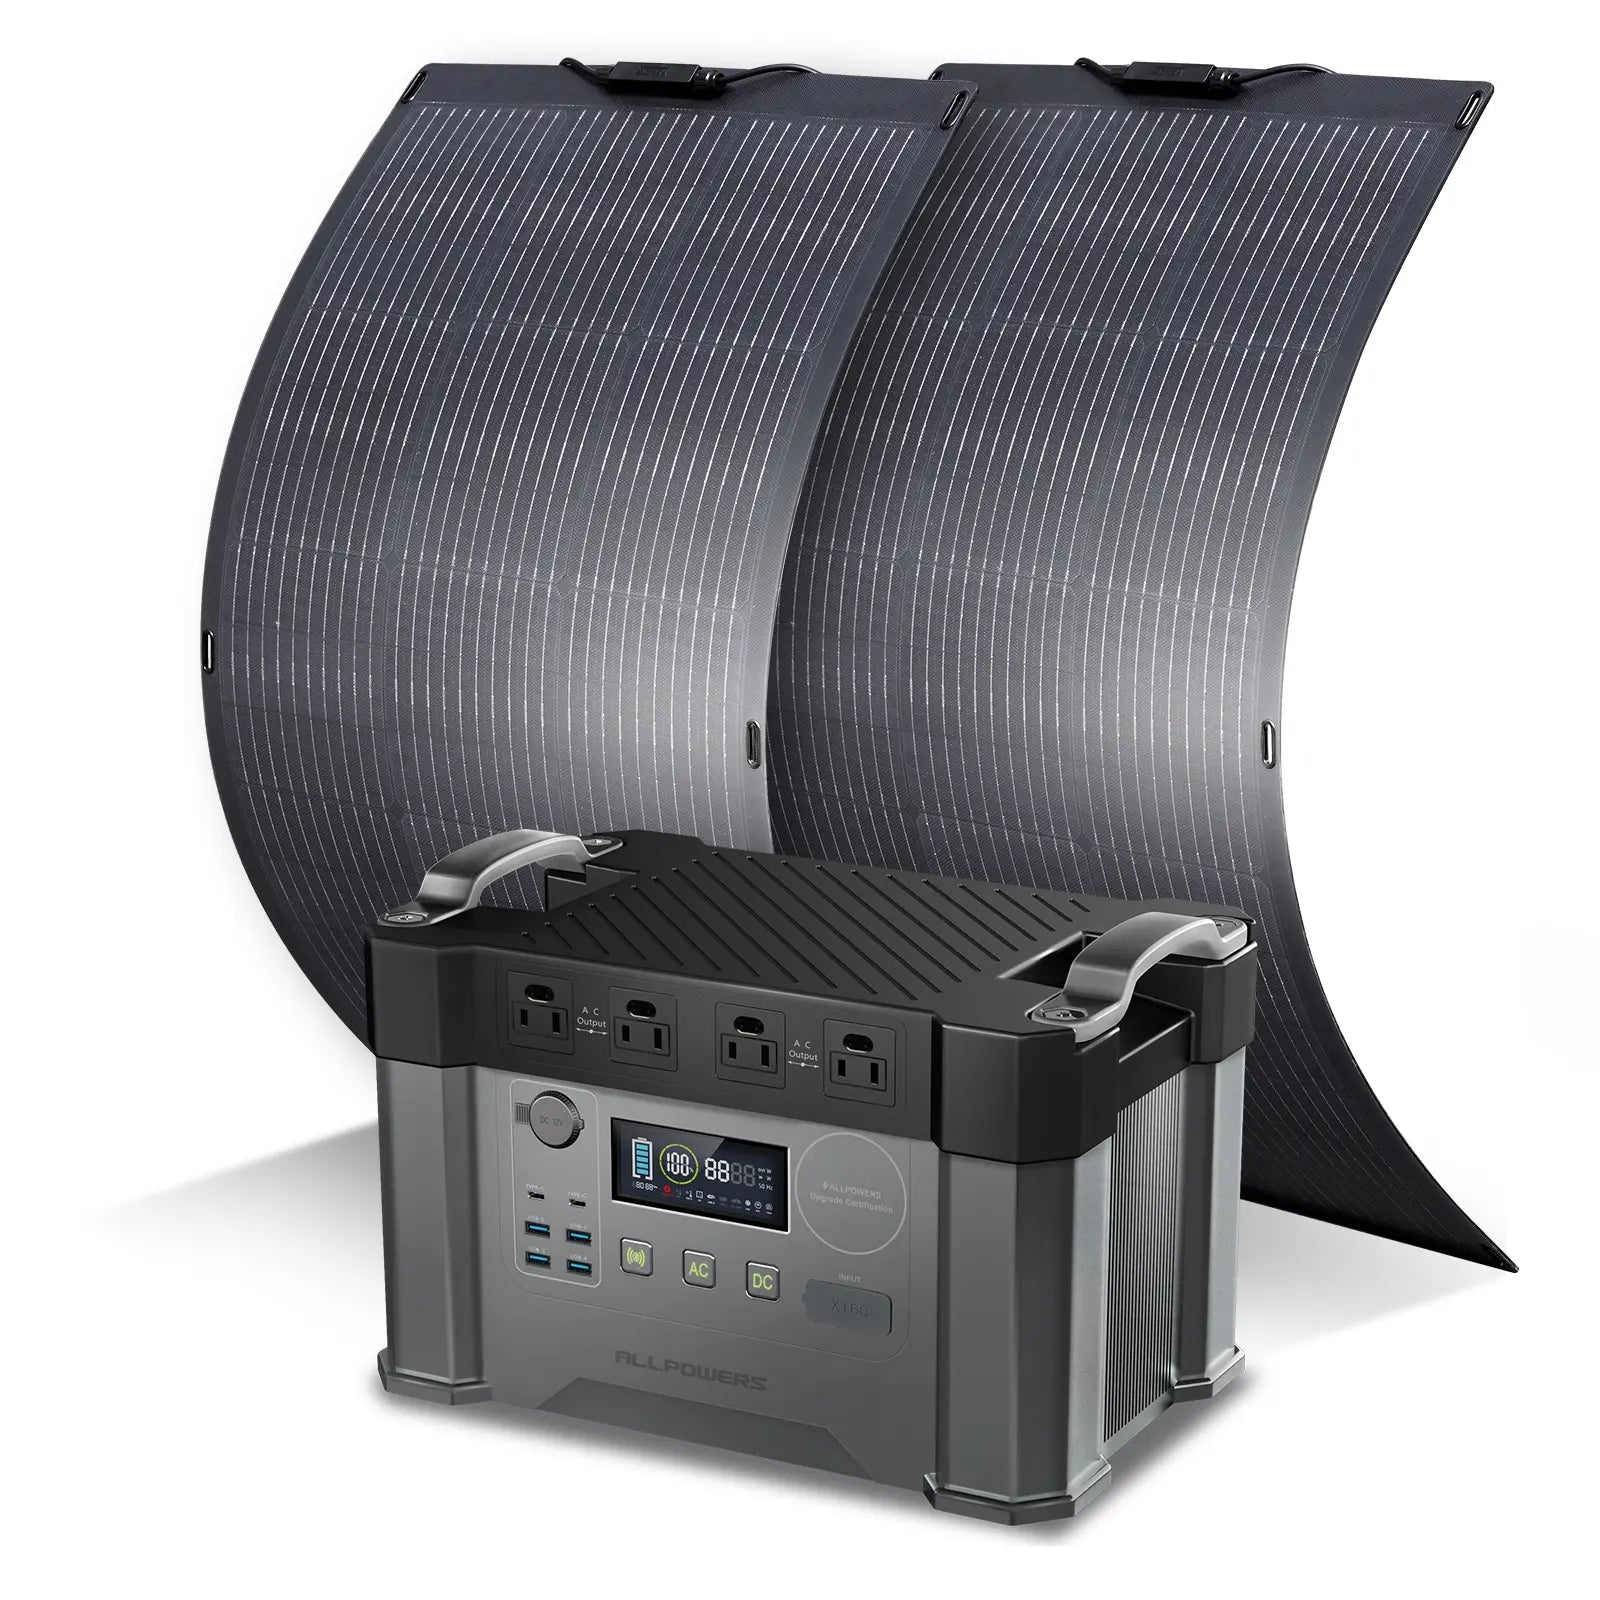 ALLPOWERS Solar Generator Kit 2000W (S2000 + 2 x SF100 100W Flexible Solar Panel)